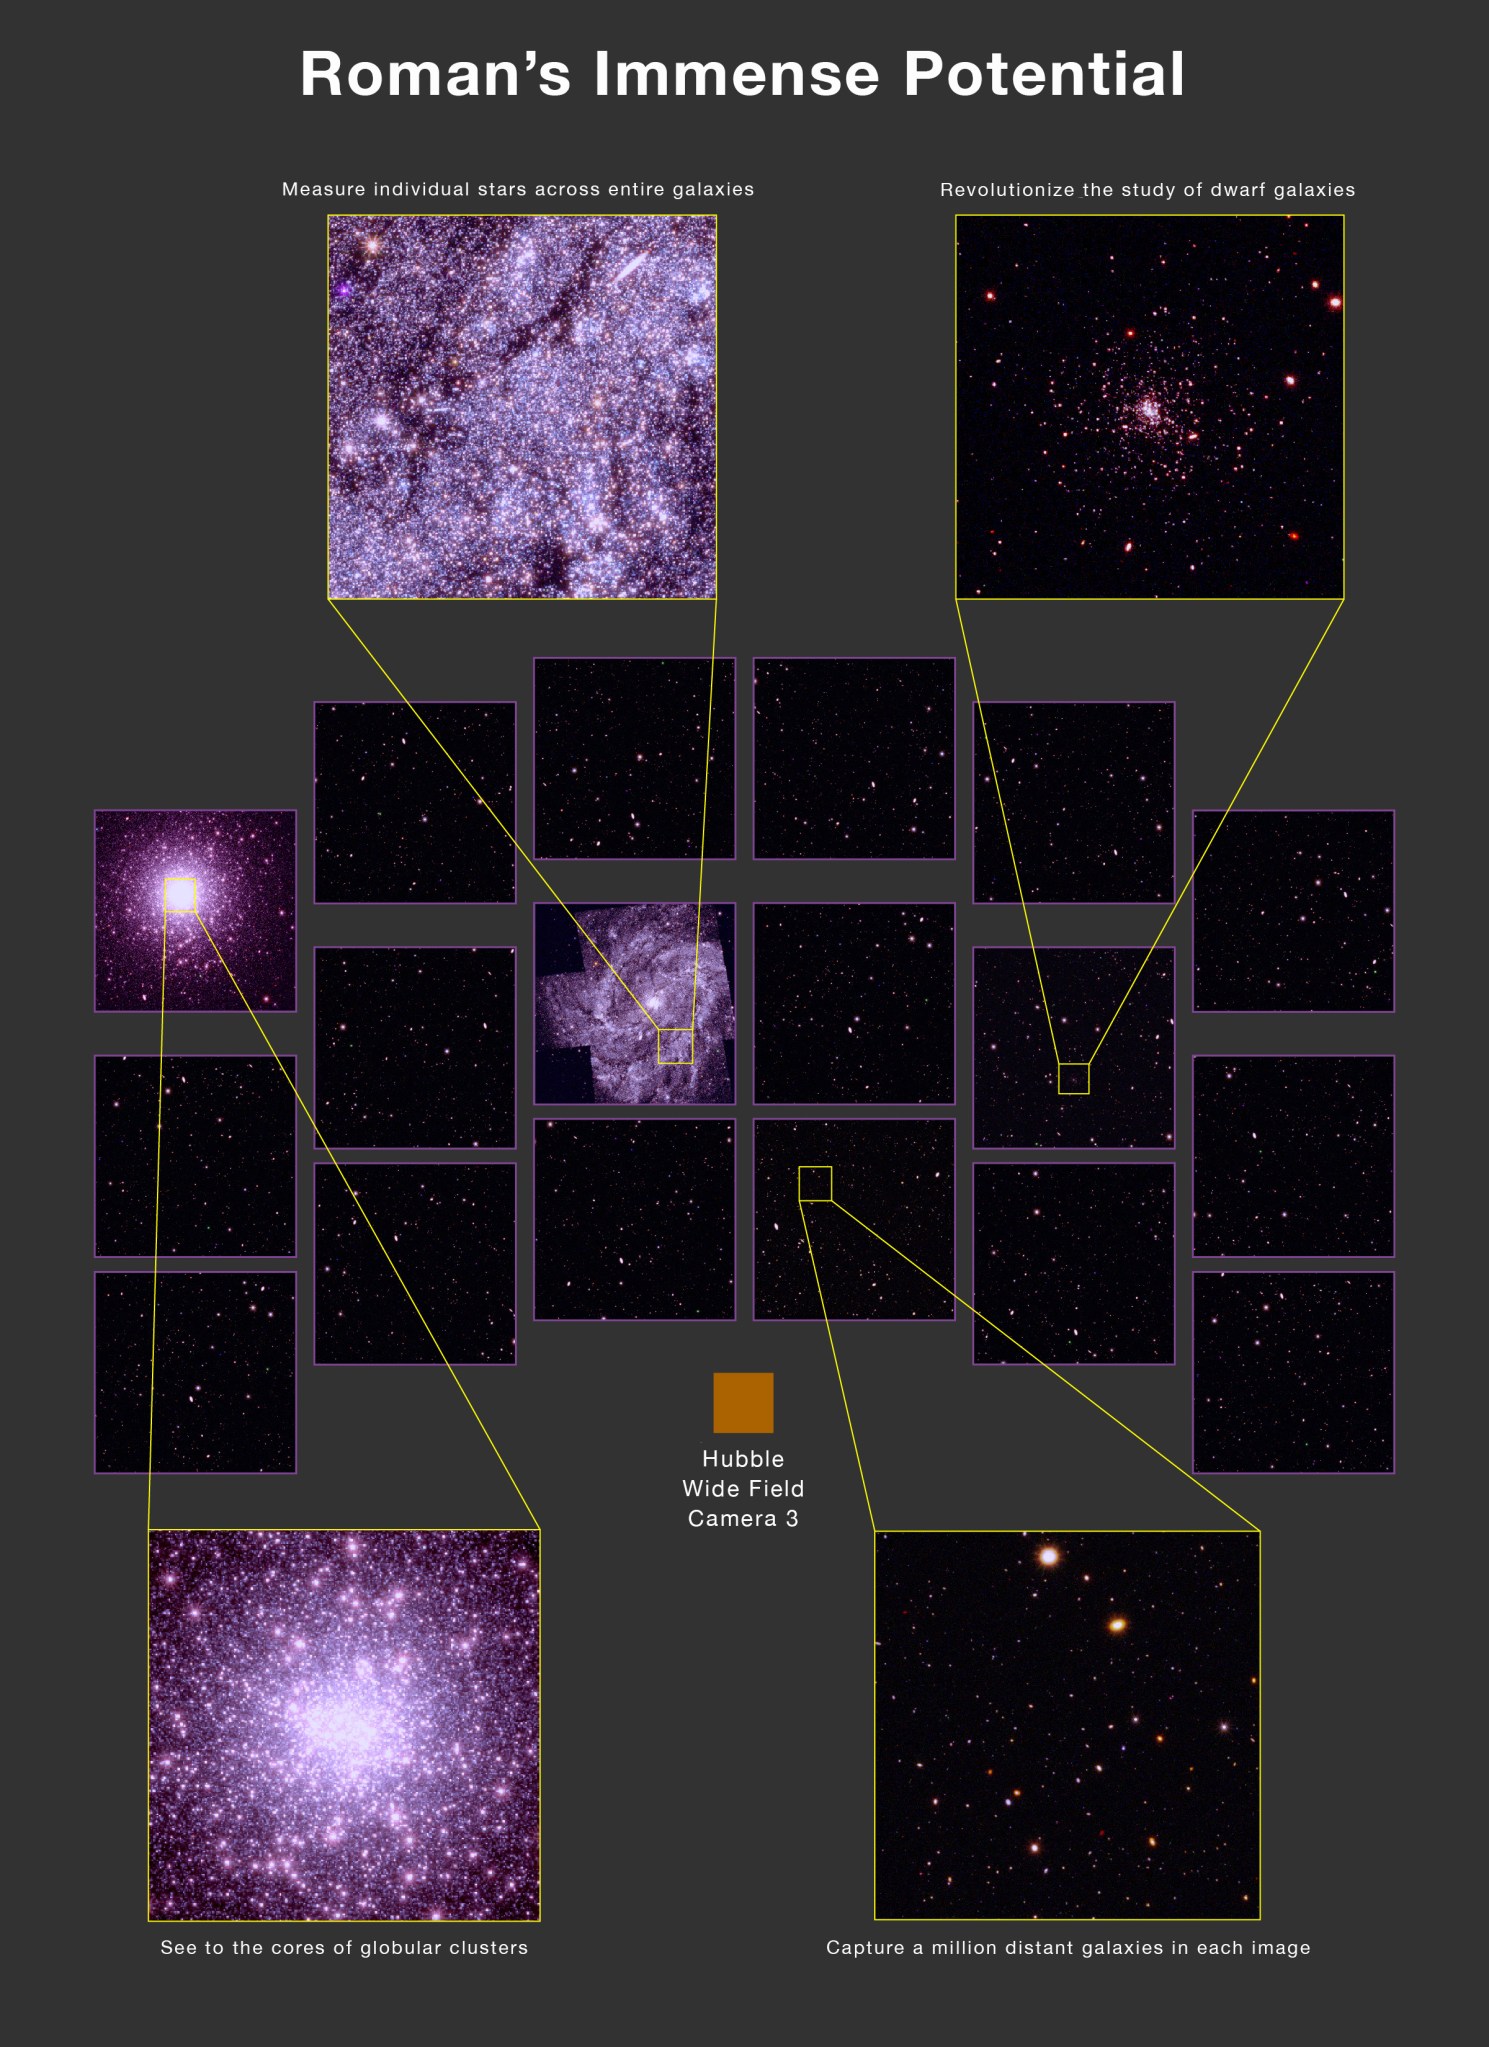 Simulated Roman image based on Hubble's CANDELS program